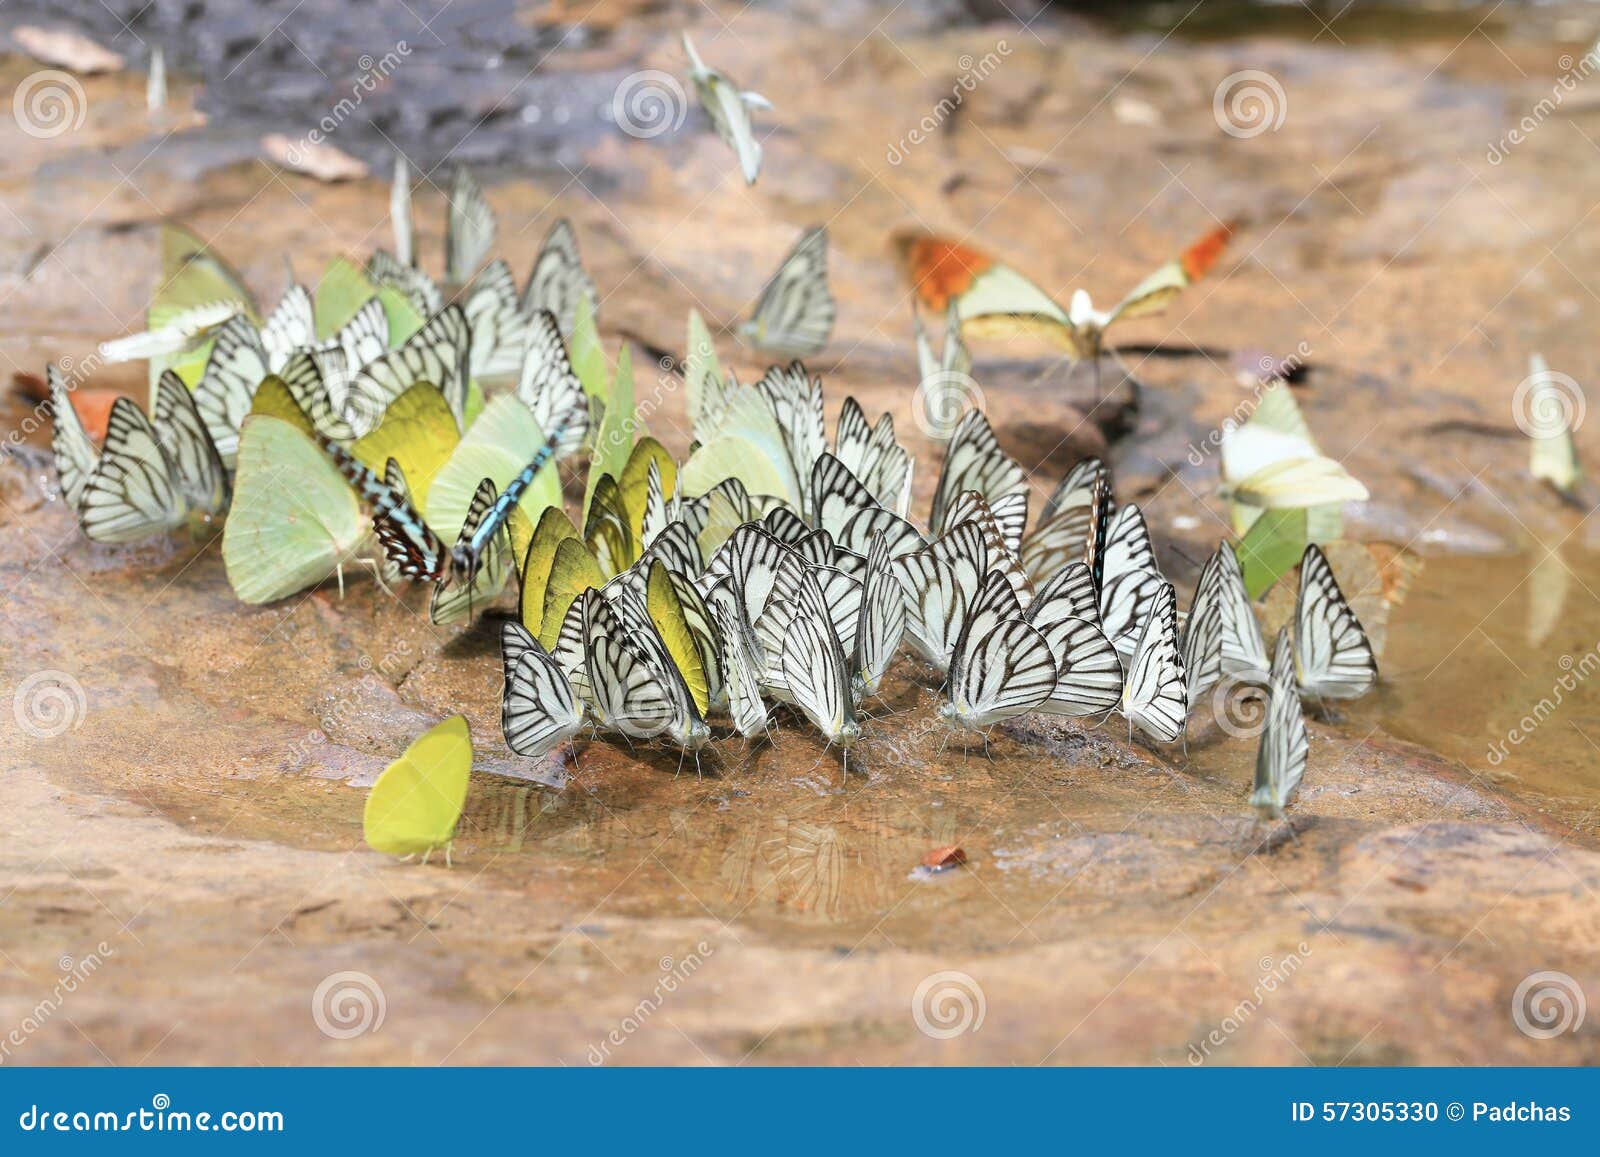 a big group of black-veined white butterflies (aporia crataegi